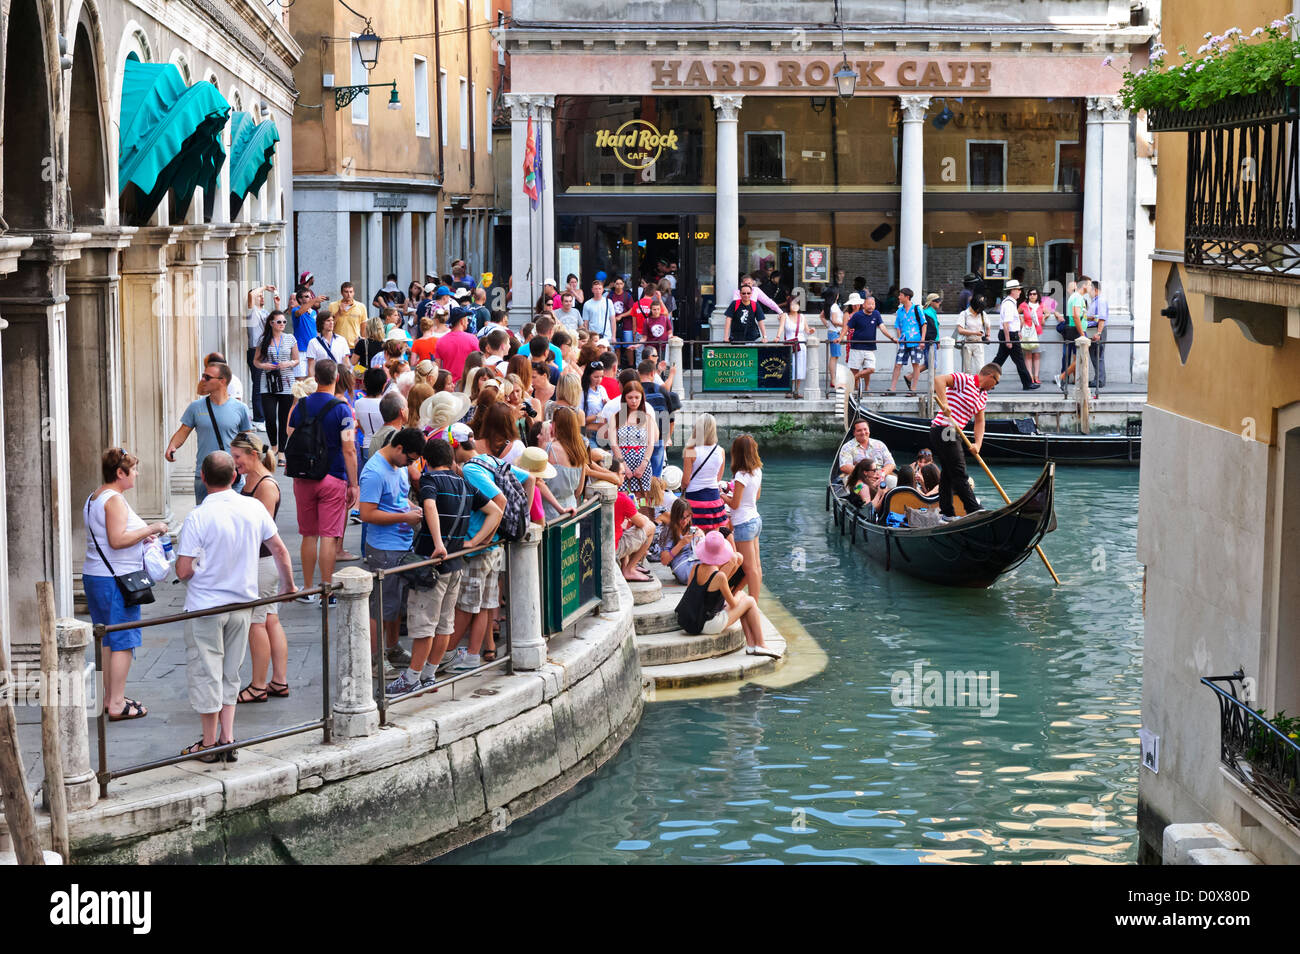 Tourists gathered by the Hard Rock Café, Venice, Italy. Stock Photo